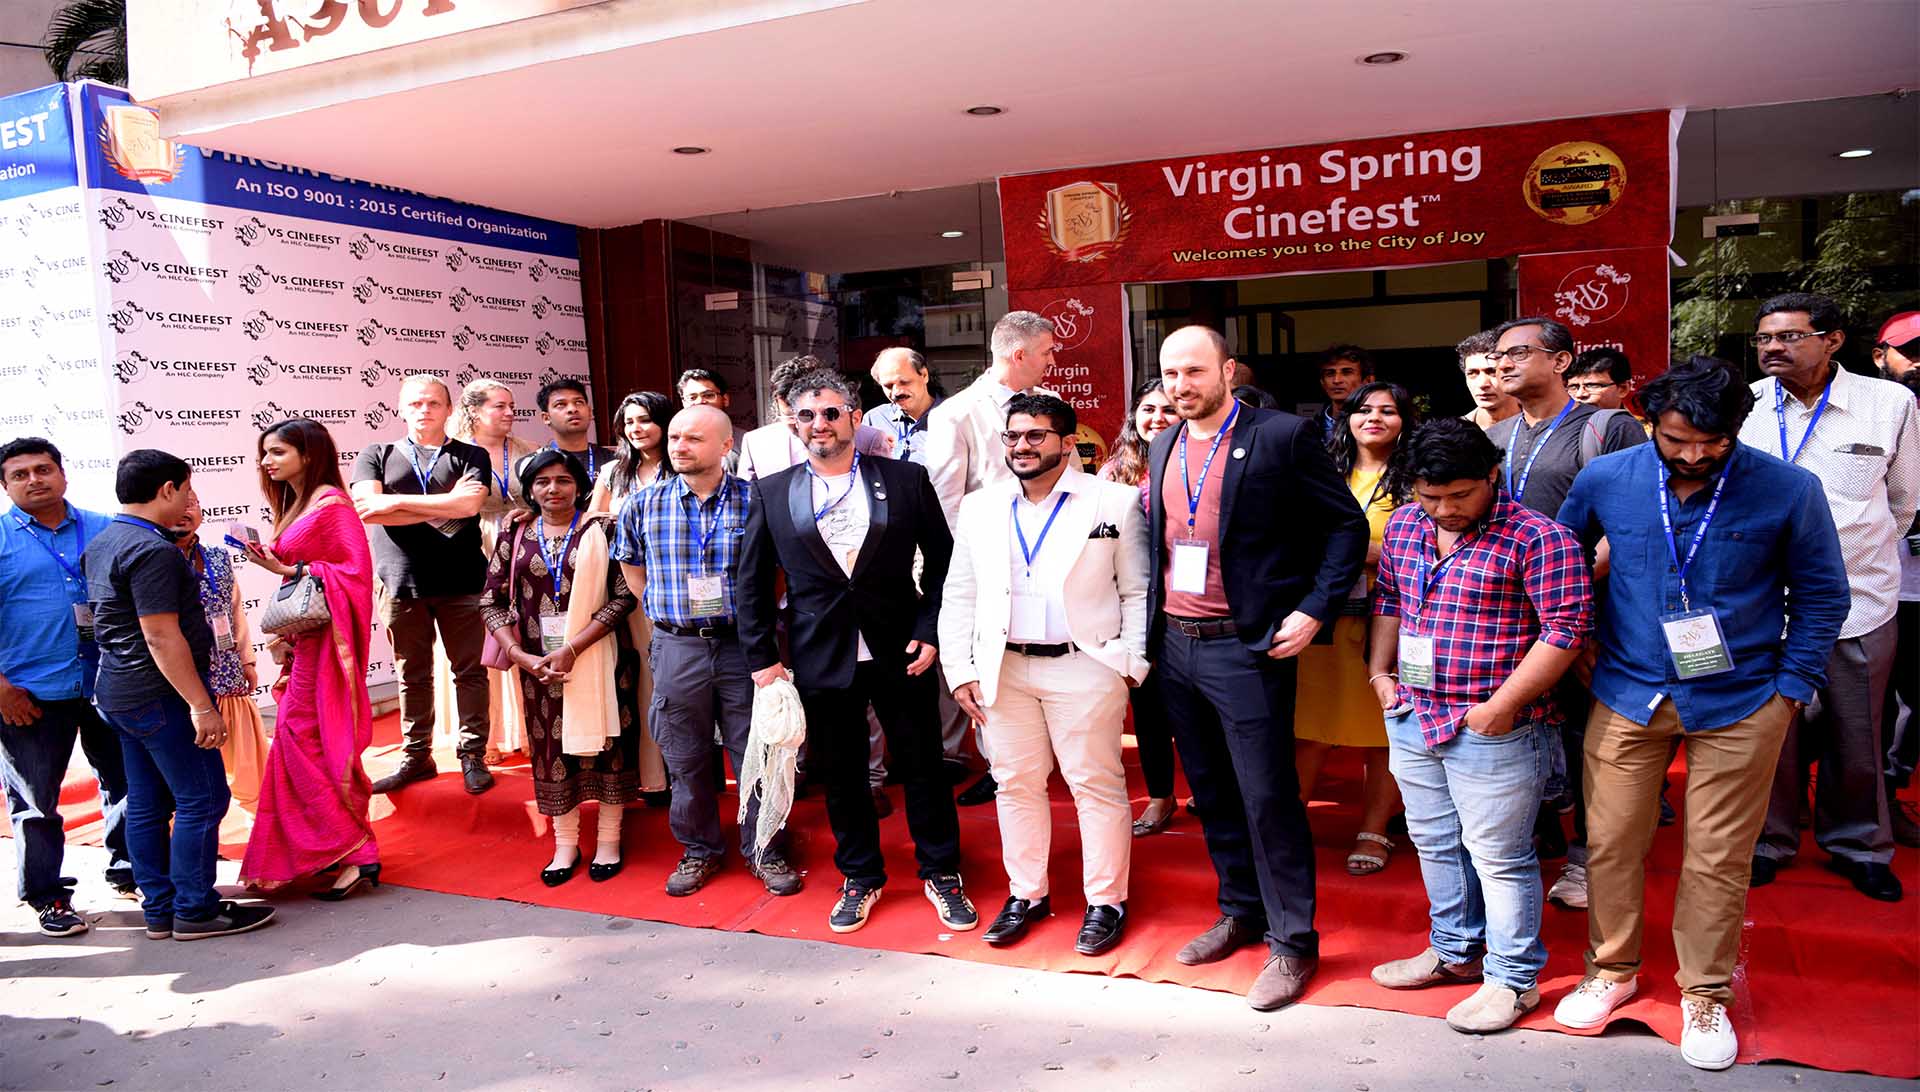 Film Festival, Scriptwriting Contest, Film Festival Submission, Film Festival Entry